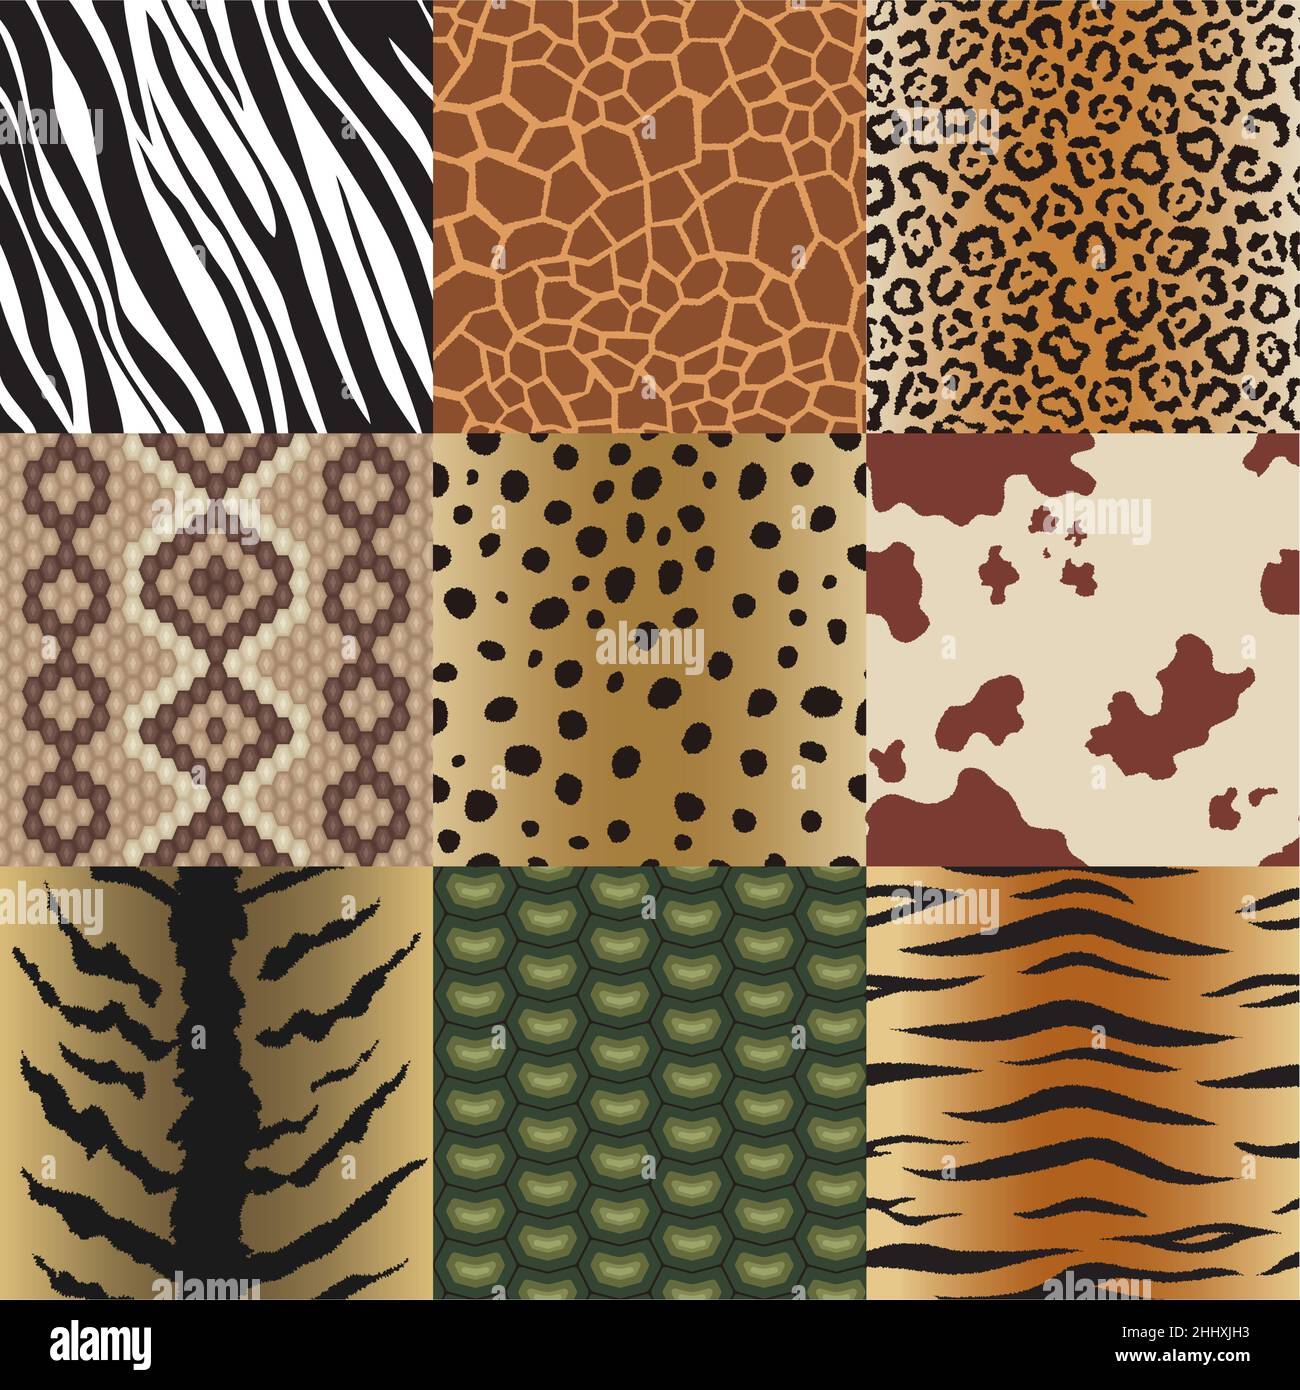 Premium Vector  Black and white seamless animal pattern jaguar leopard  cheetah panther skin small spot animal f